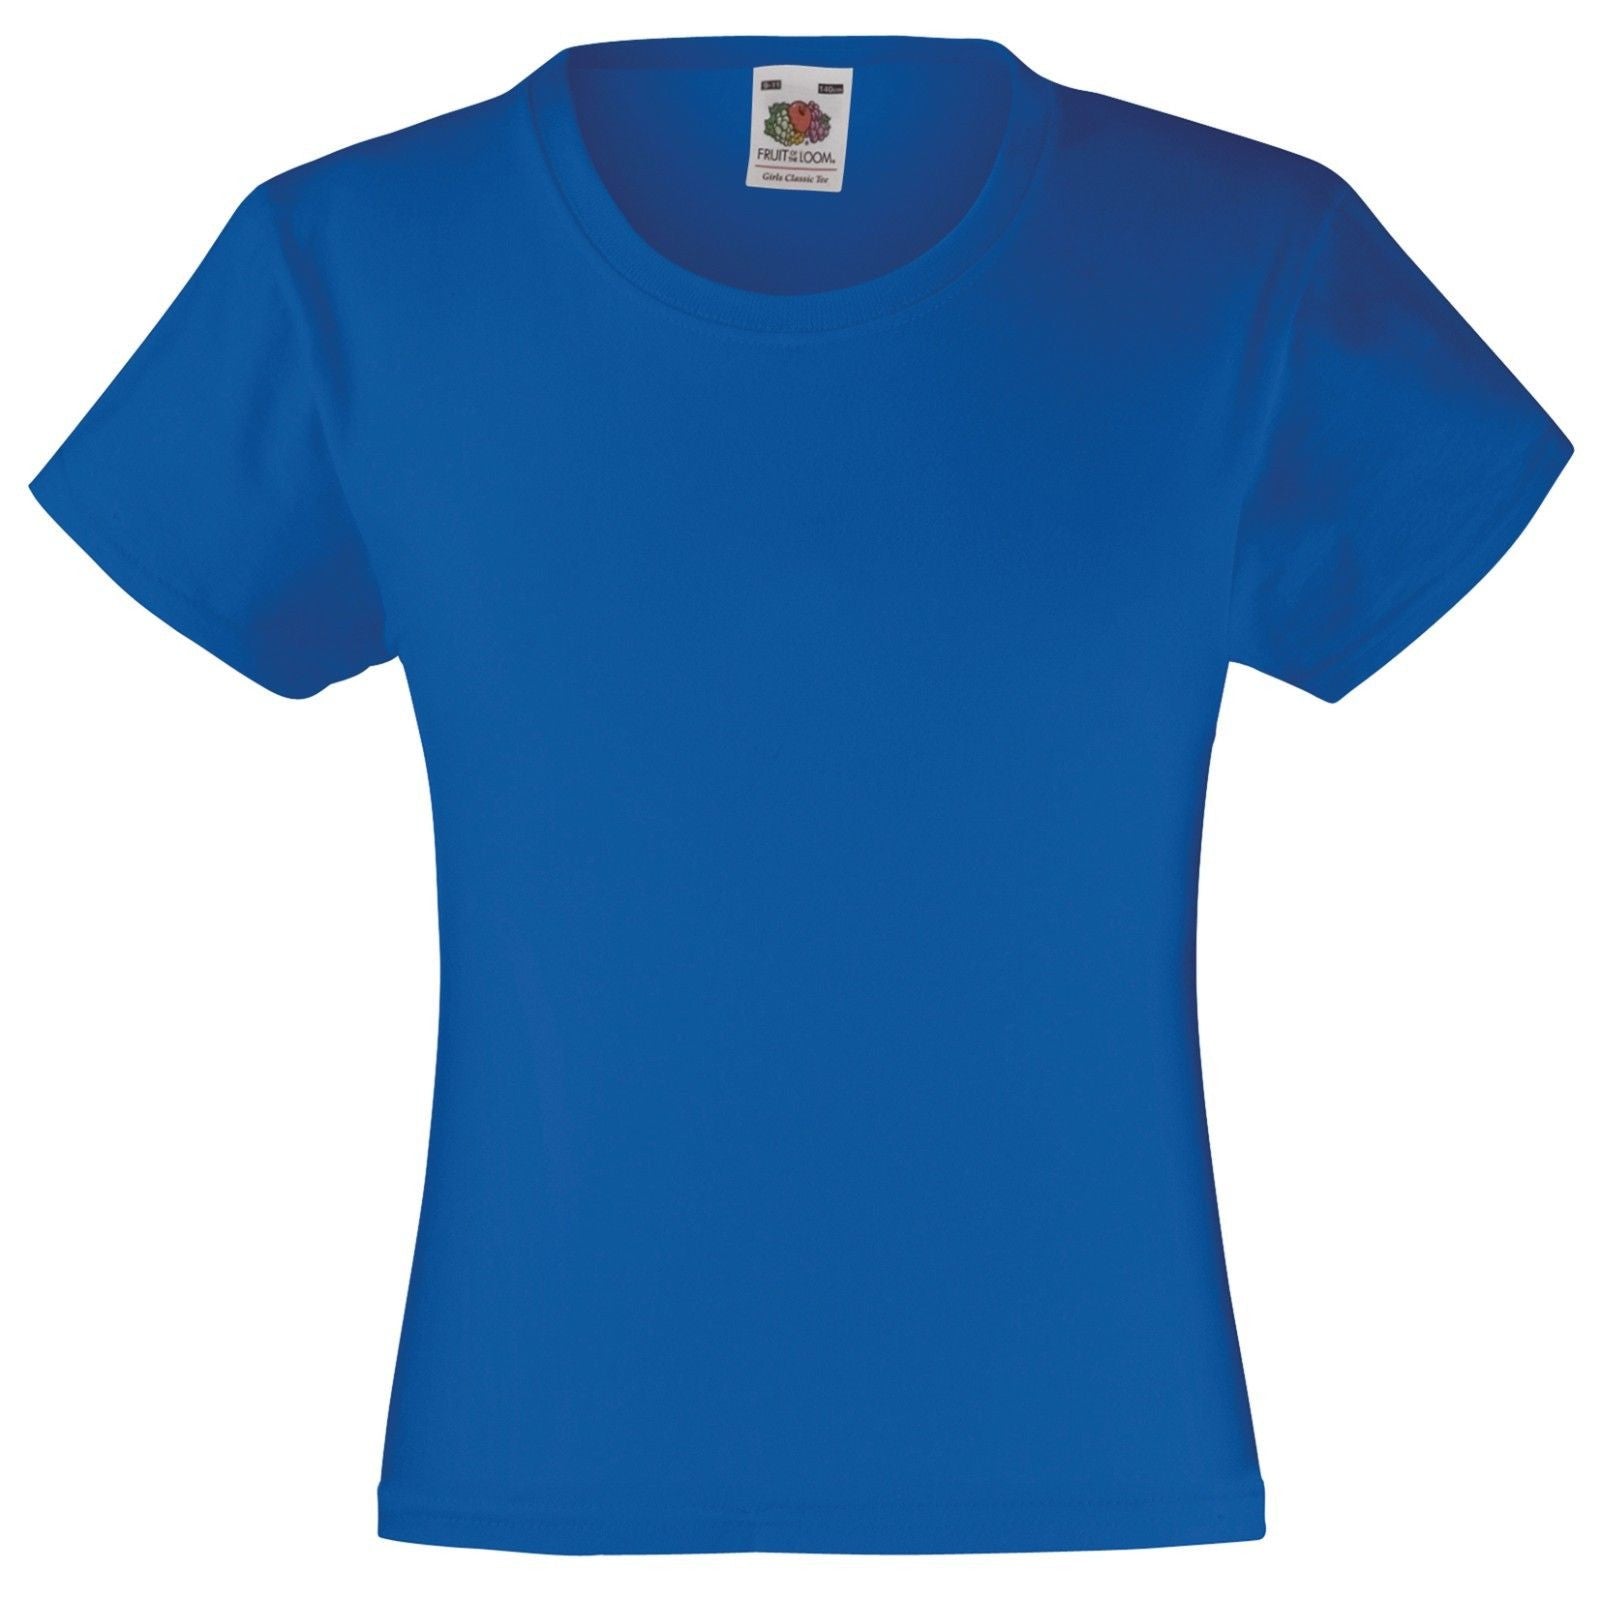 Buy Girls Plain Shirts - Royal Blue - Galore